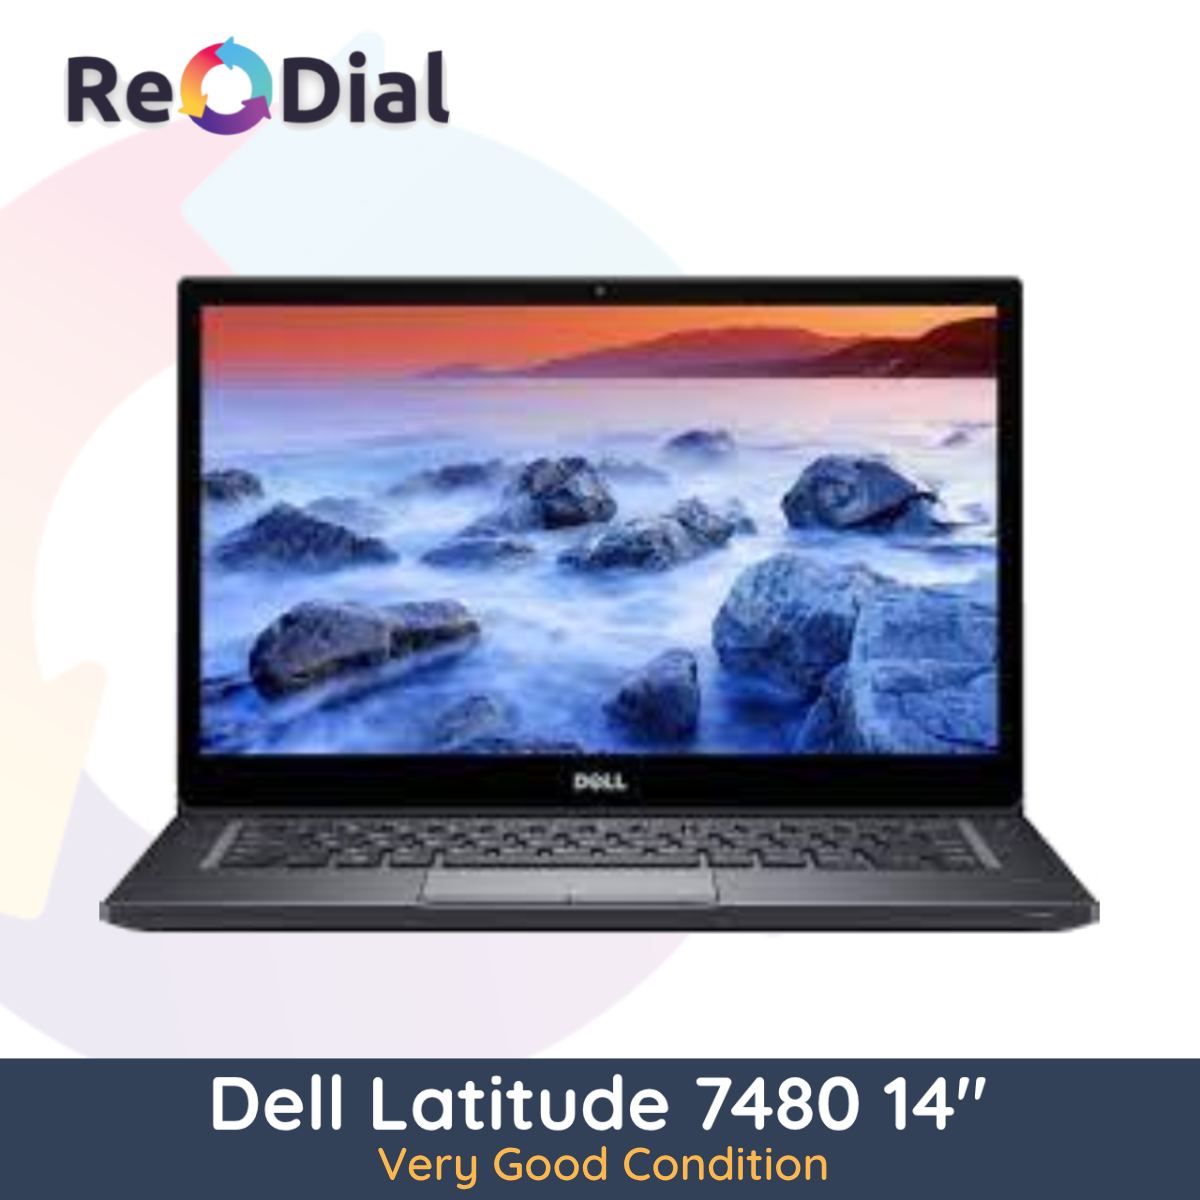 Dell Latitude 7480 14" Laptop i5-7300U 256GB 8GB RAM - Very Good Condition